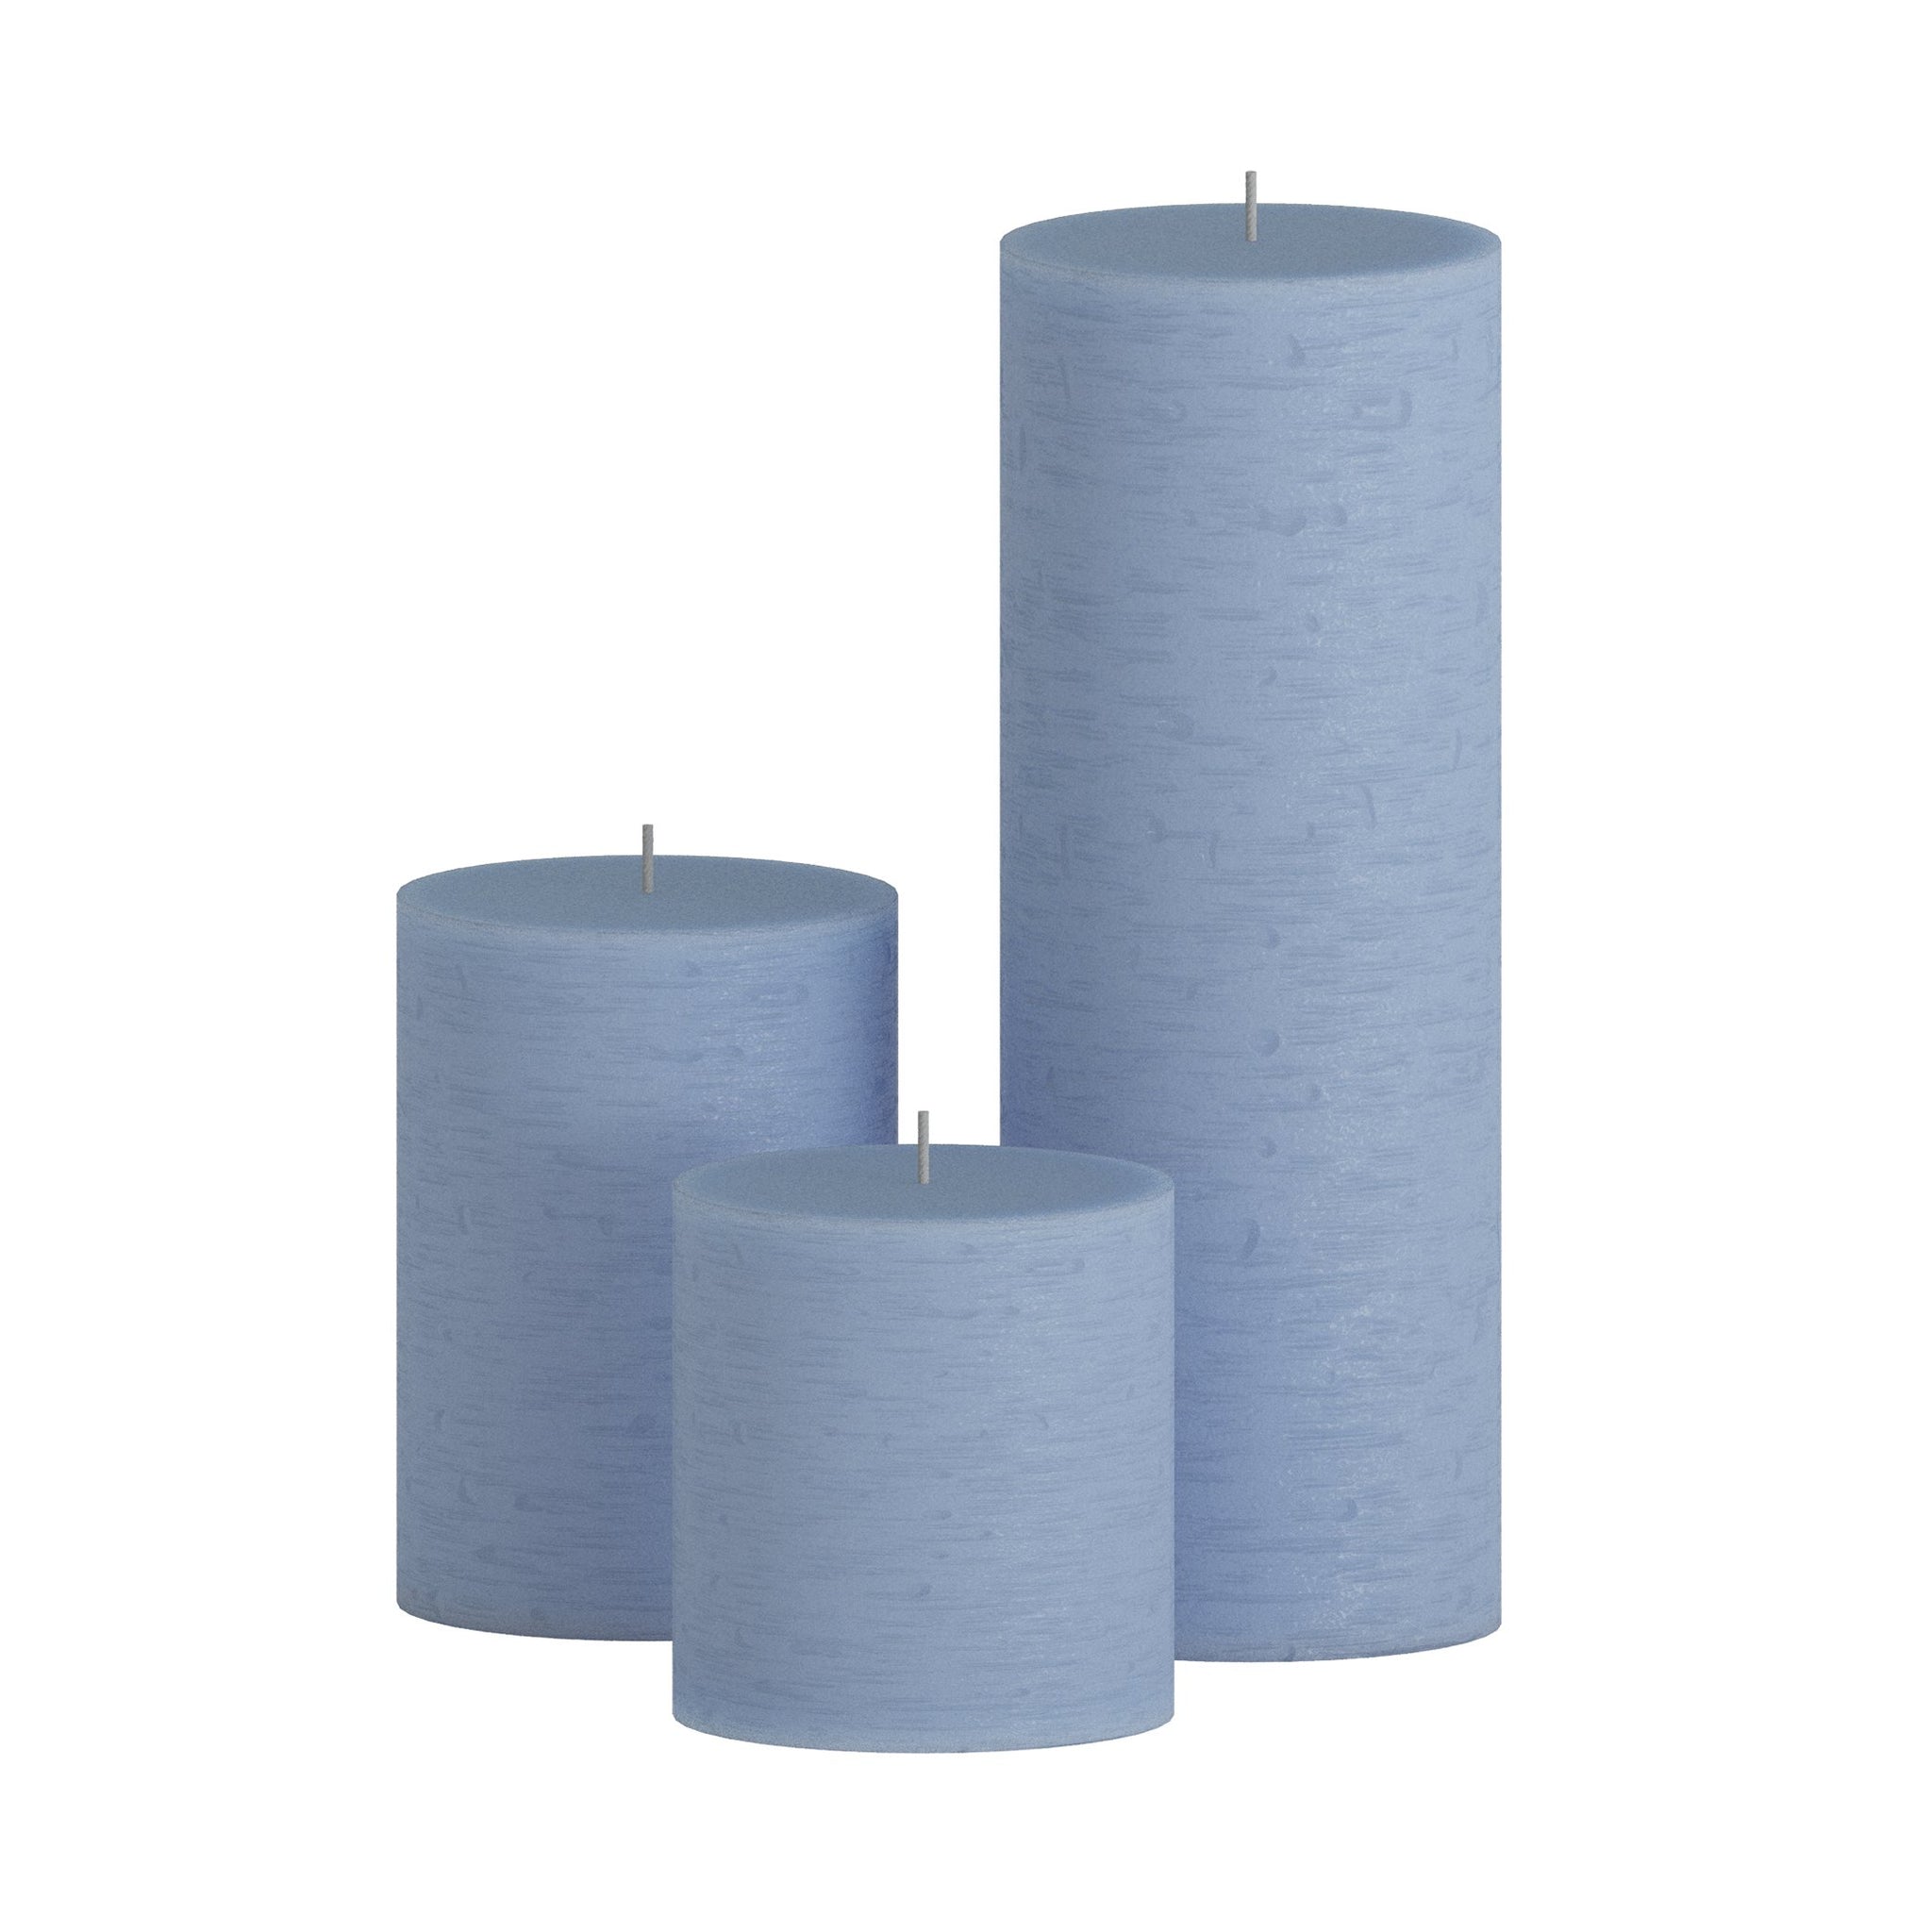 CANDWAX Baby Blue Pillar Mix - 3 inch, 4 inch & 8 inch